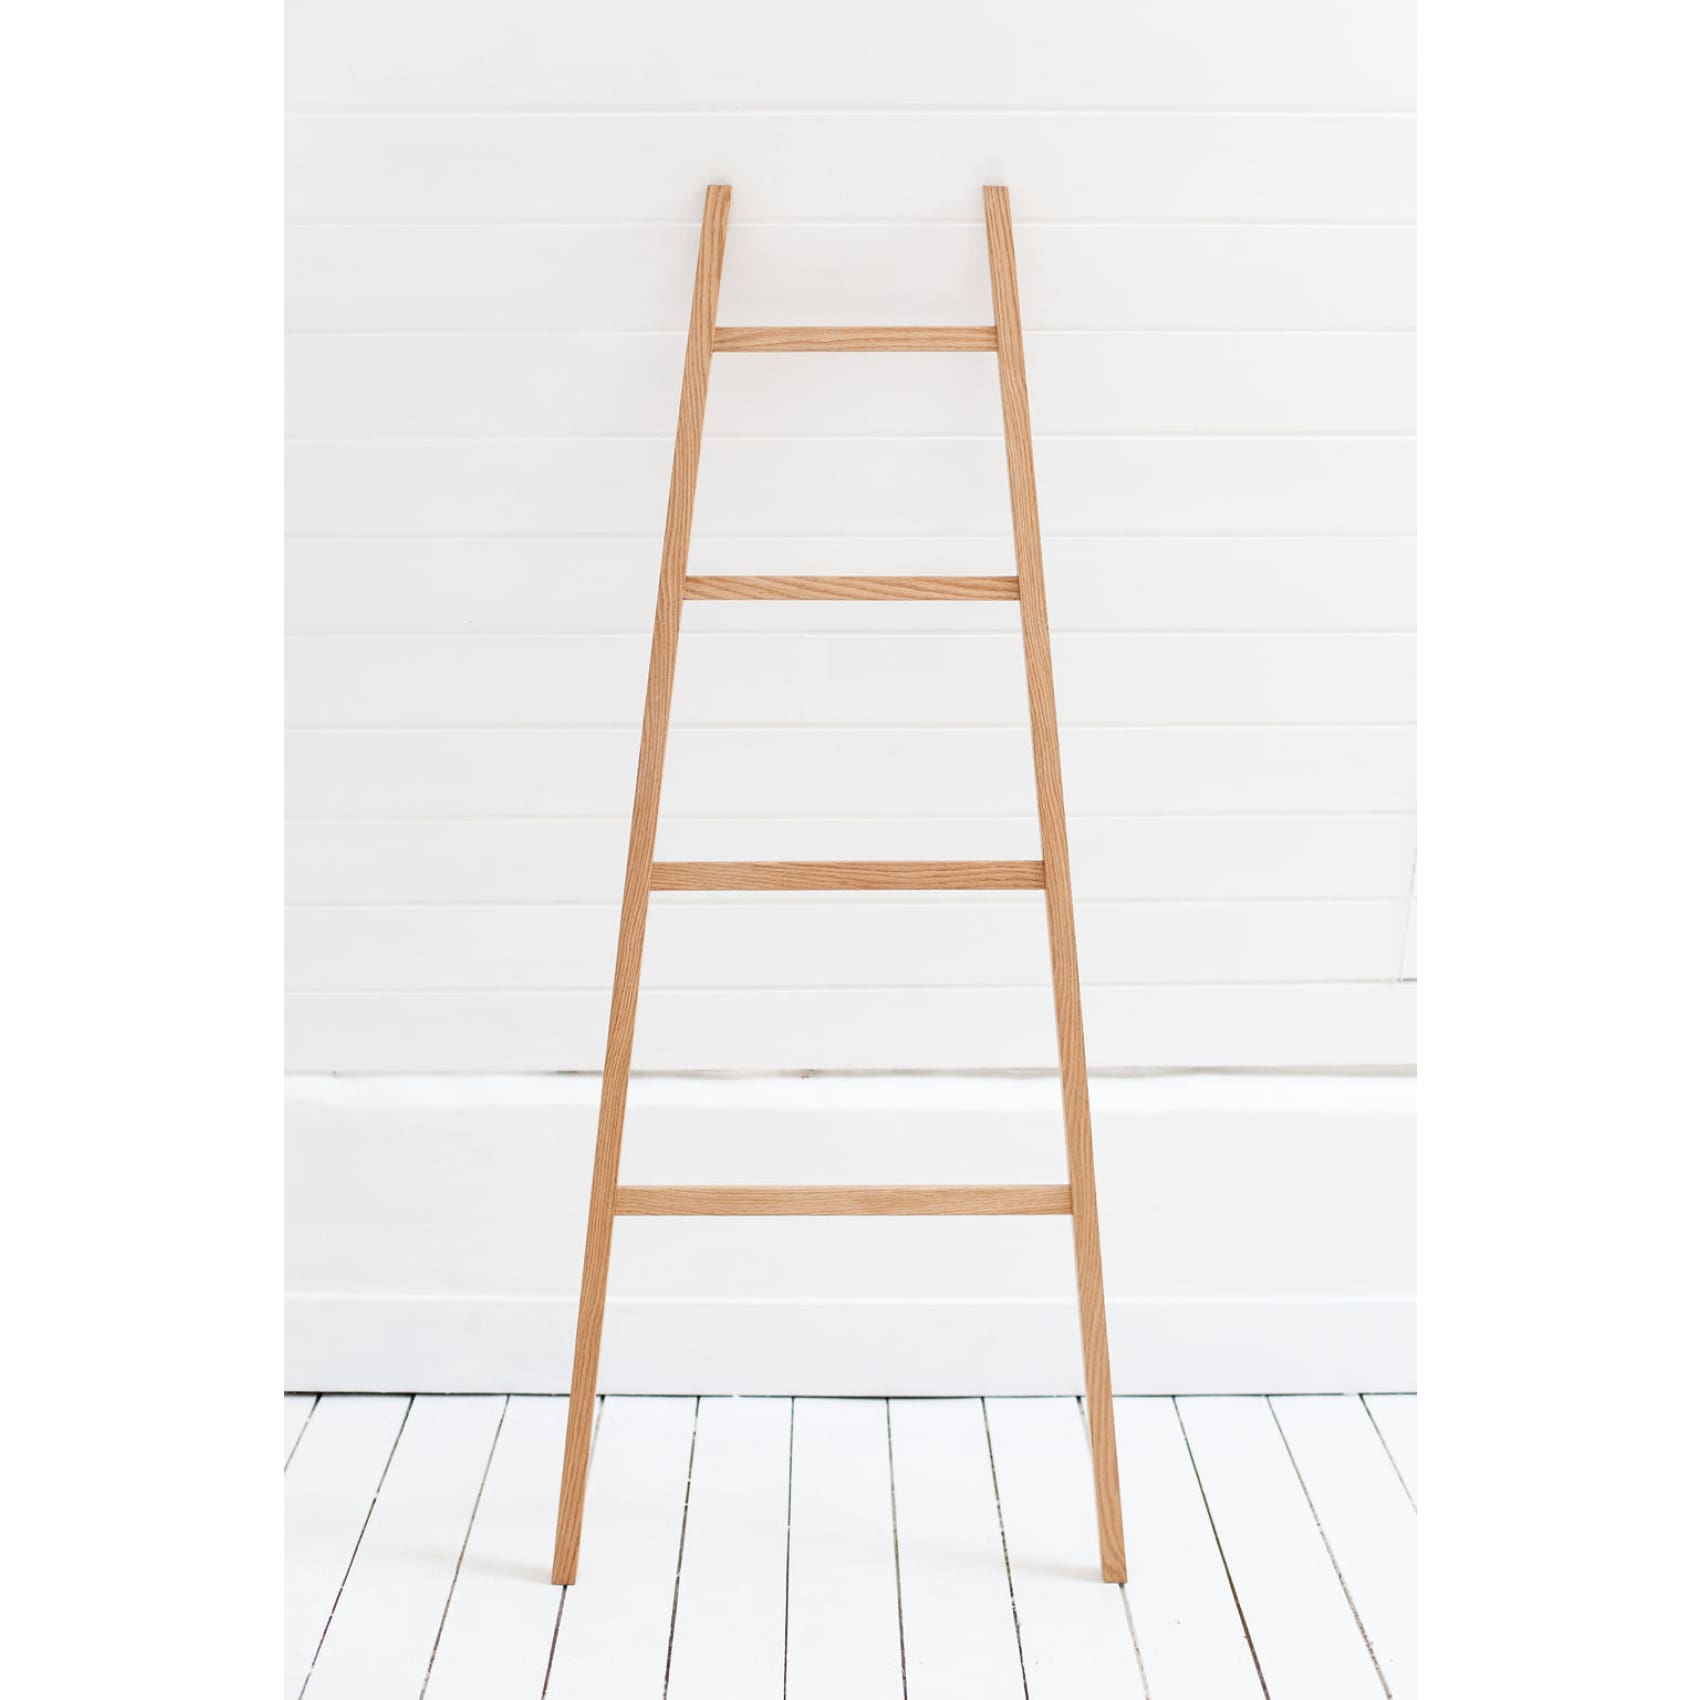 Cora Firth - Handmade Towel & Throw Ladder in Ash or Oak